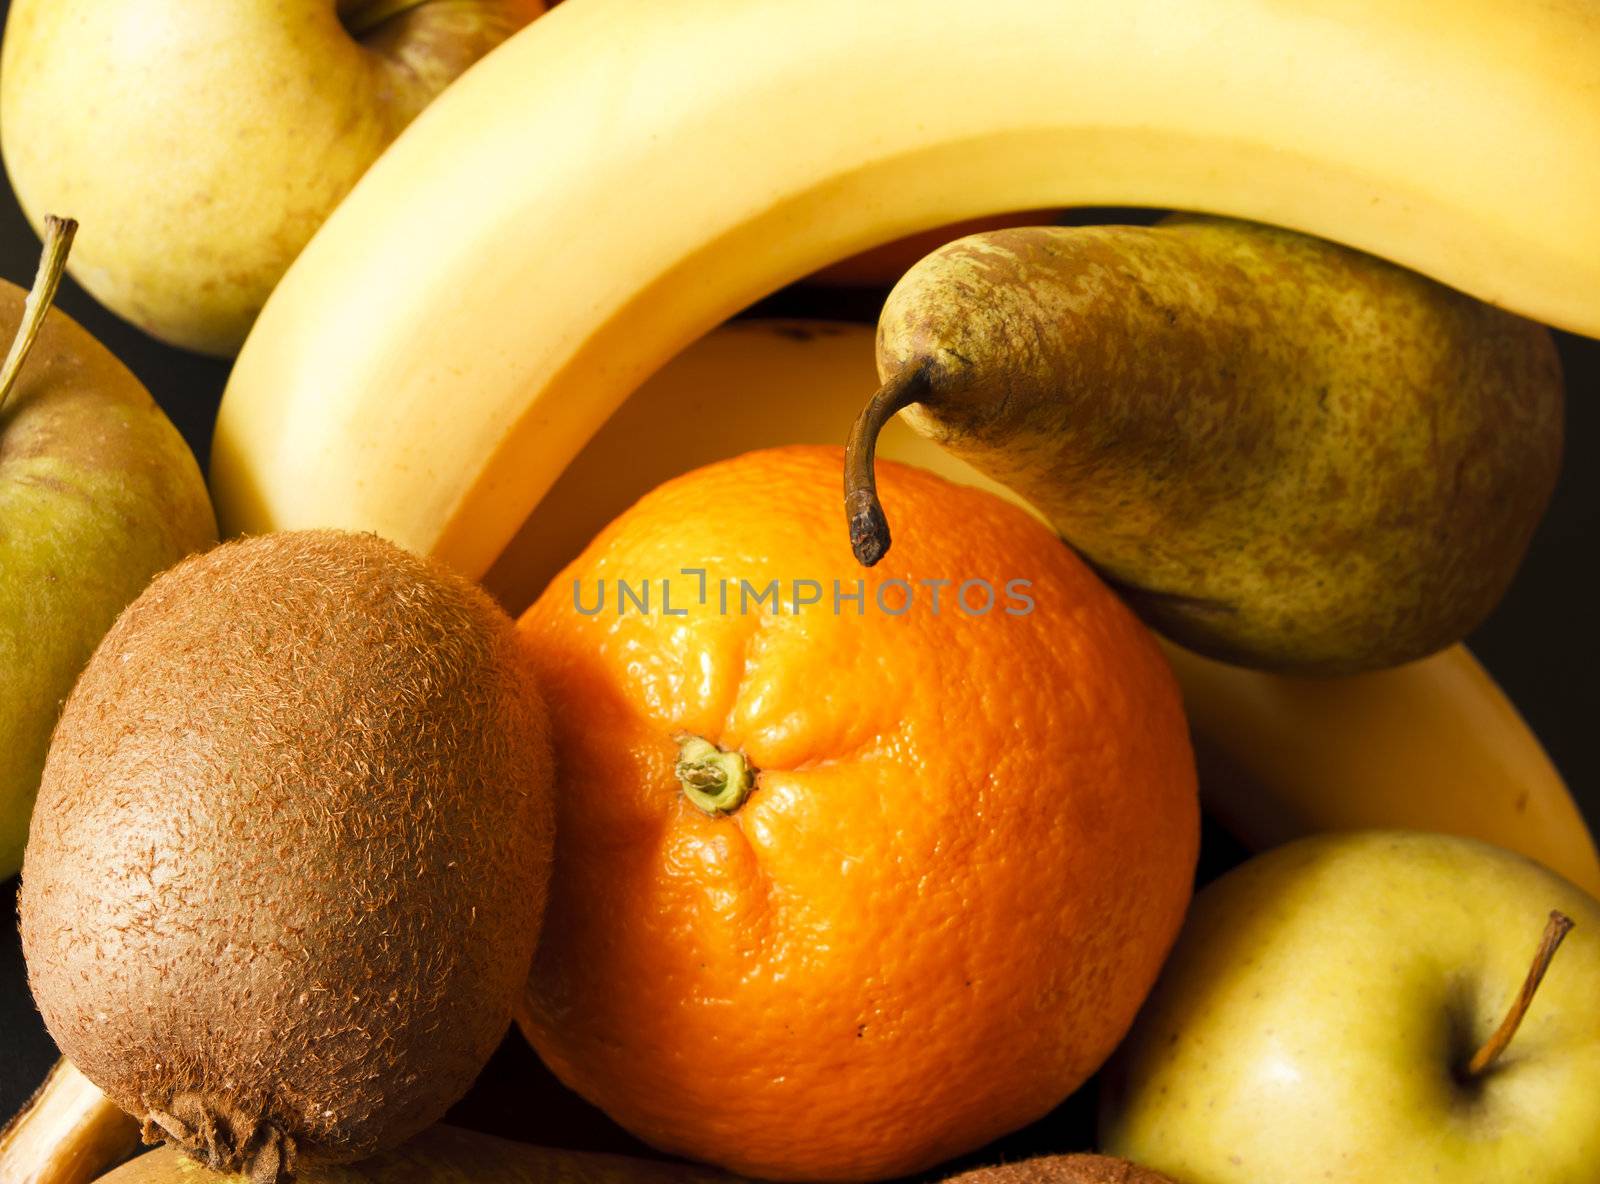 Banana, kiwi, orange, apple and pear